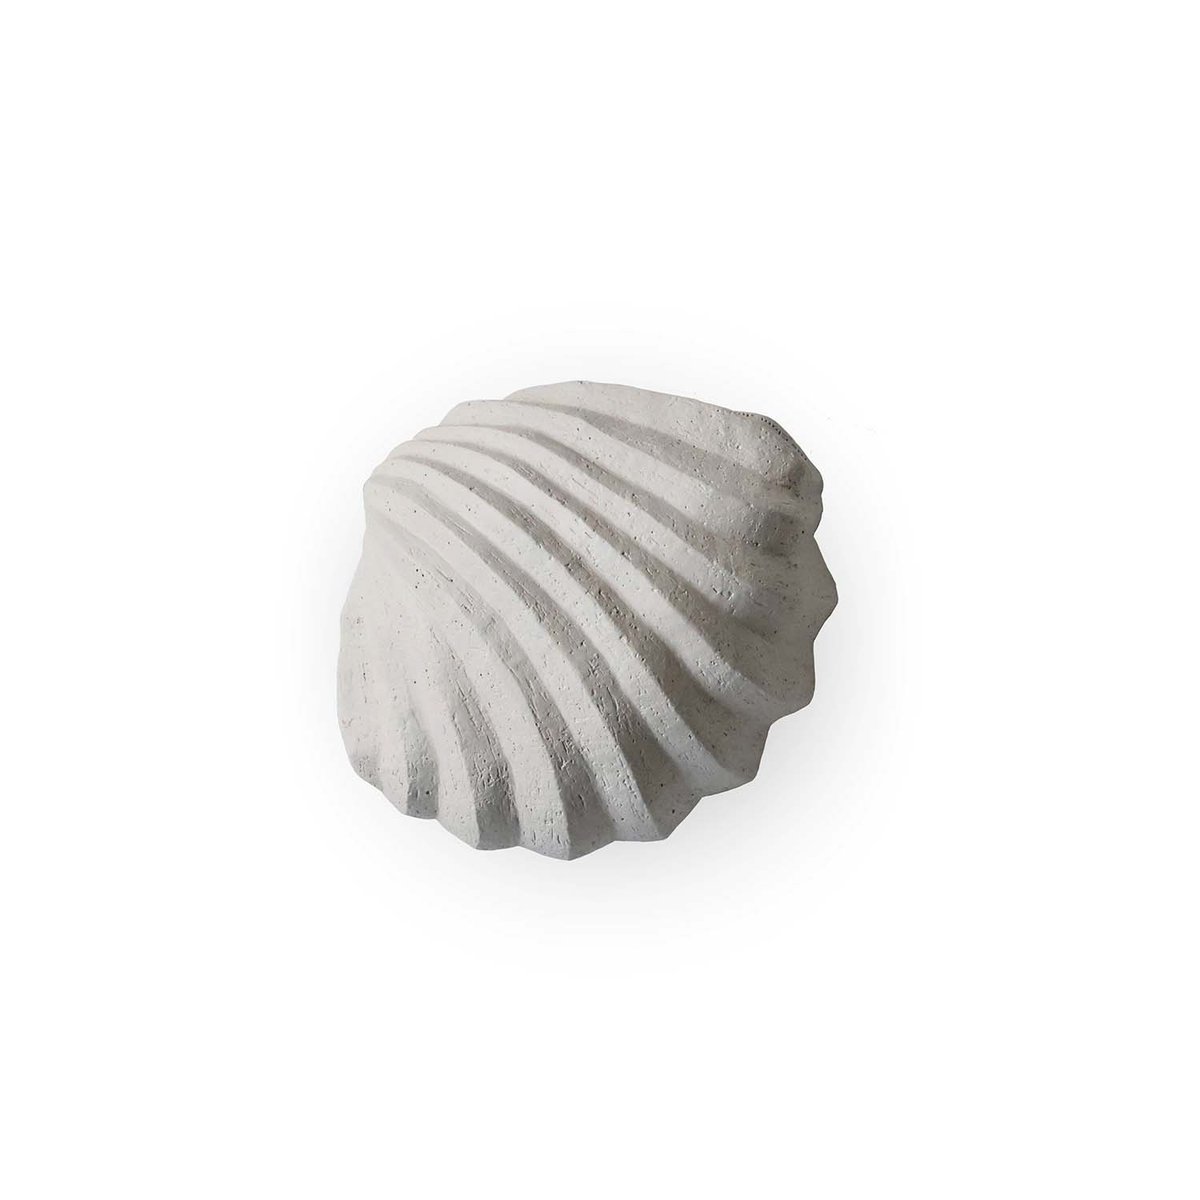 Cooee Design The Clam Shell -veistos 13 cm Limestone